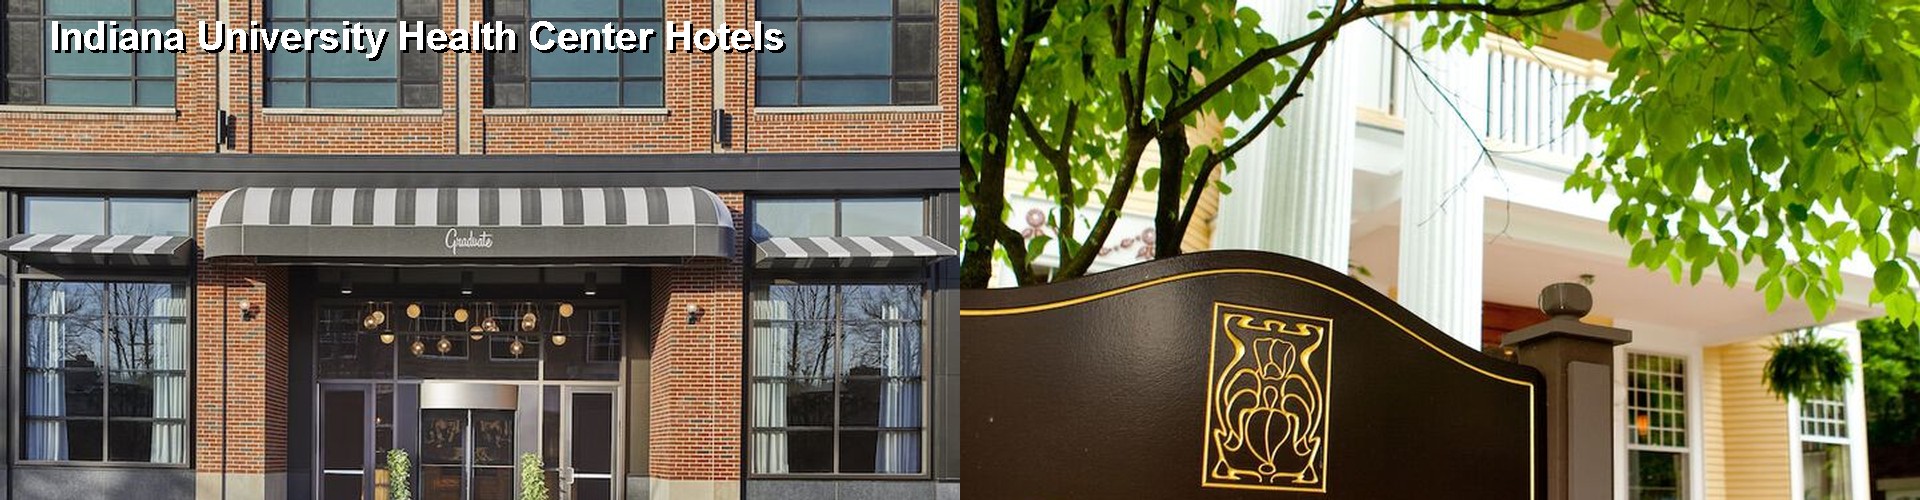 5 Best Hotels near Indiana University Health Center